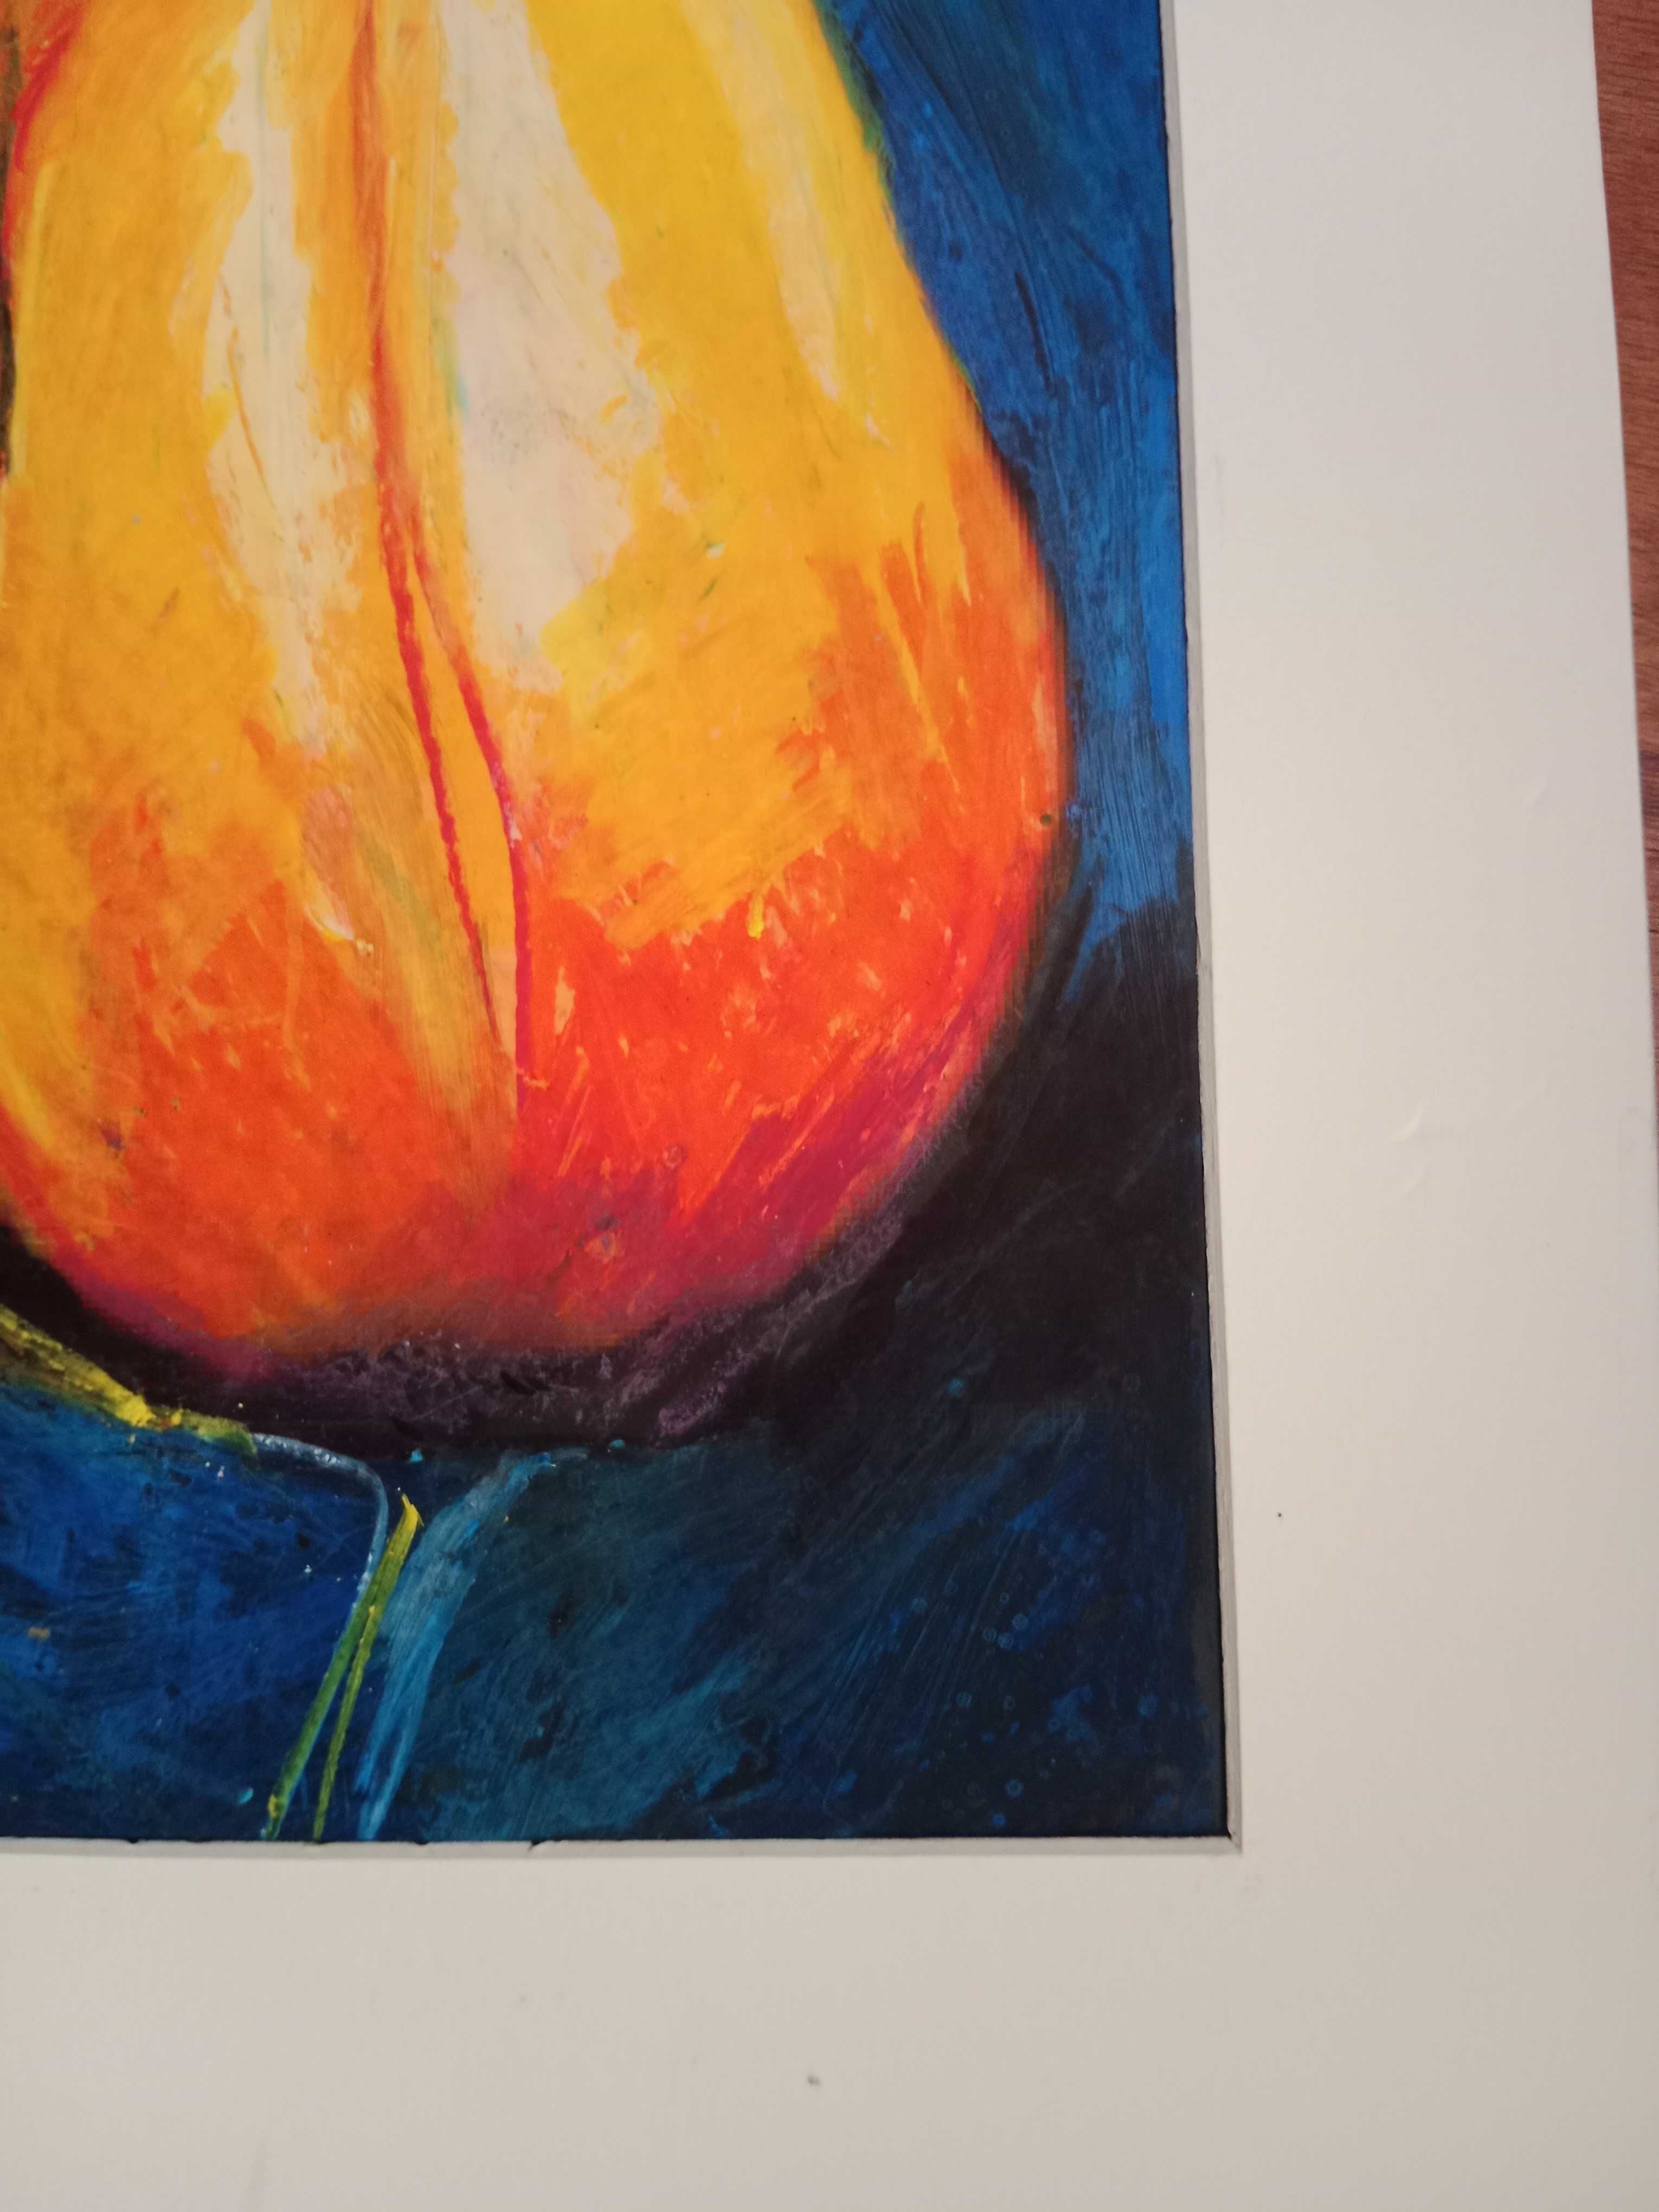 Letni majowy tulipan